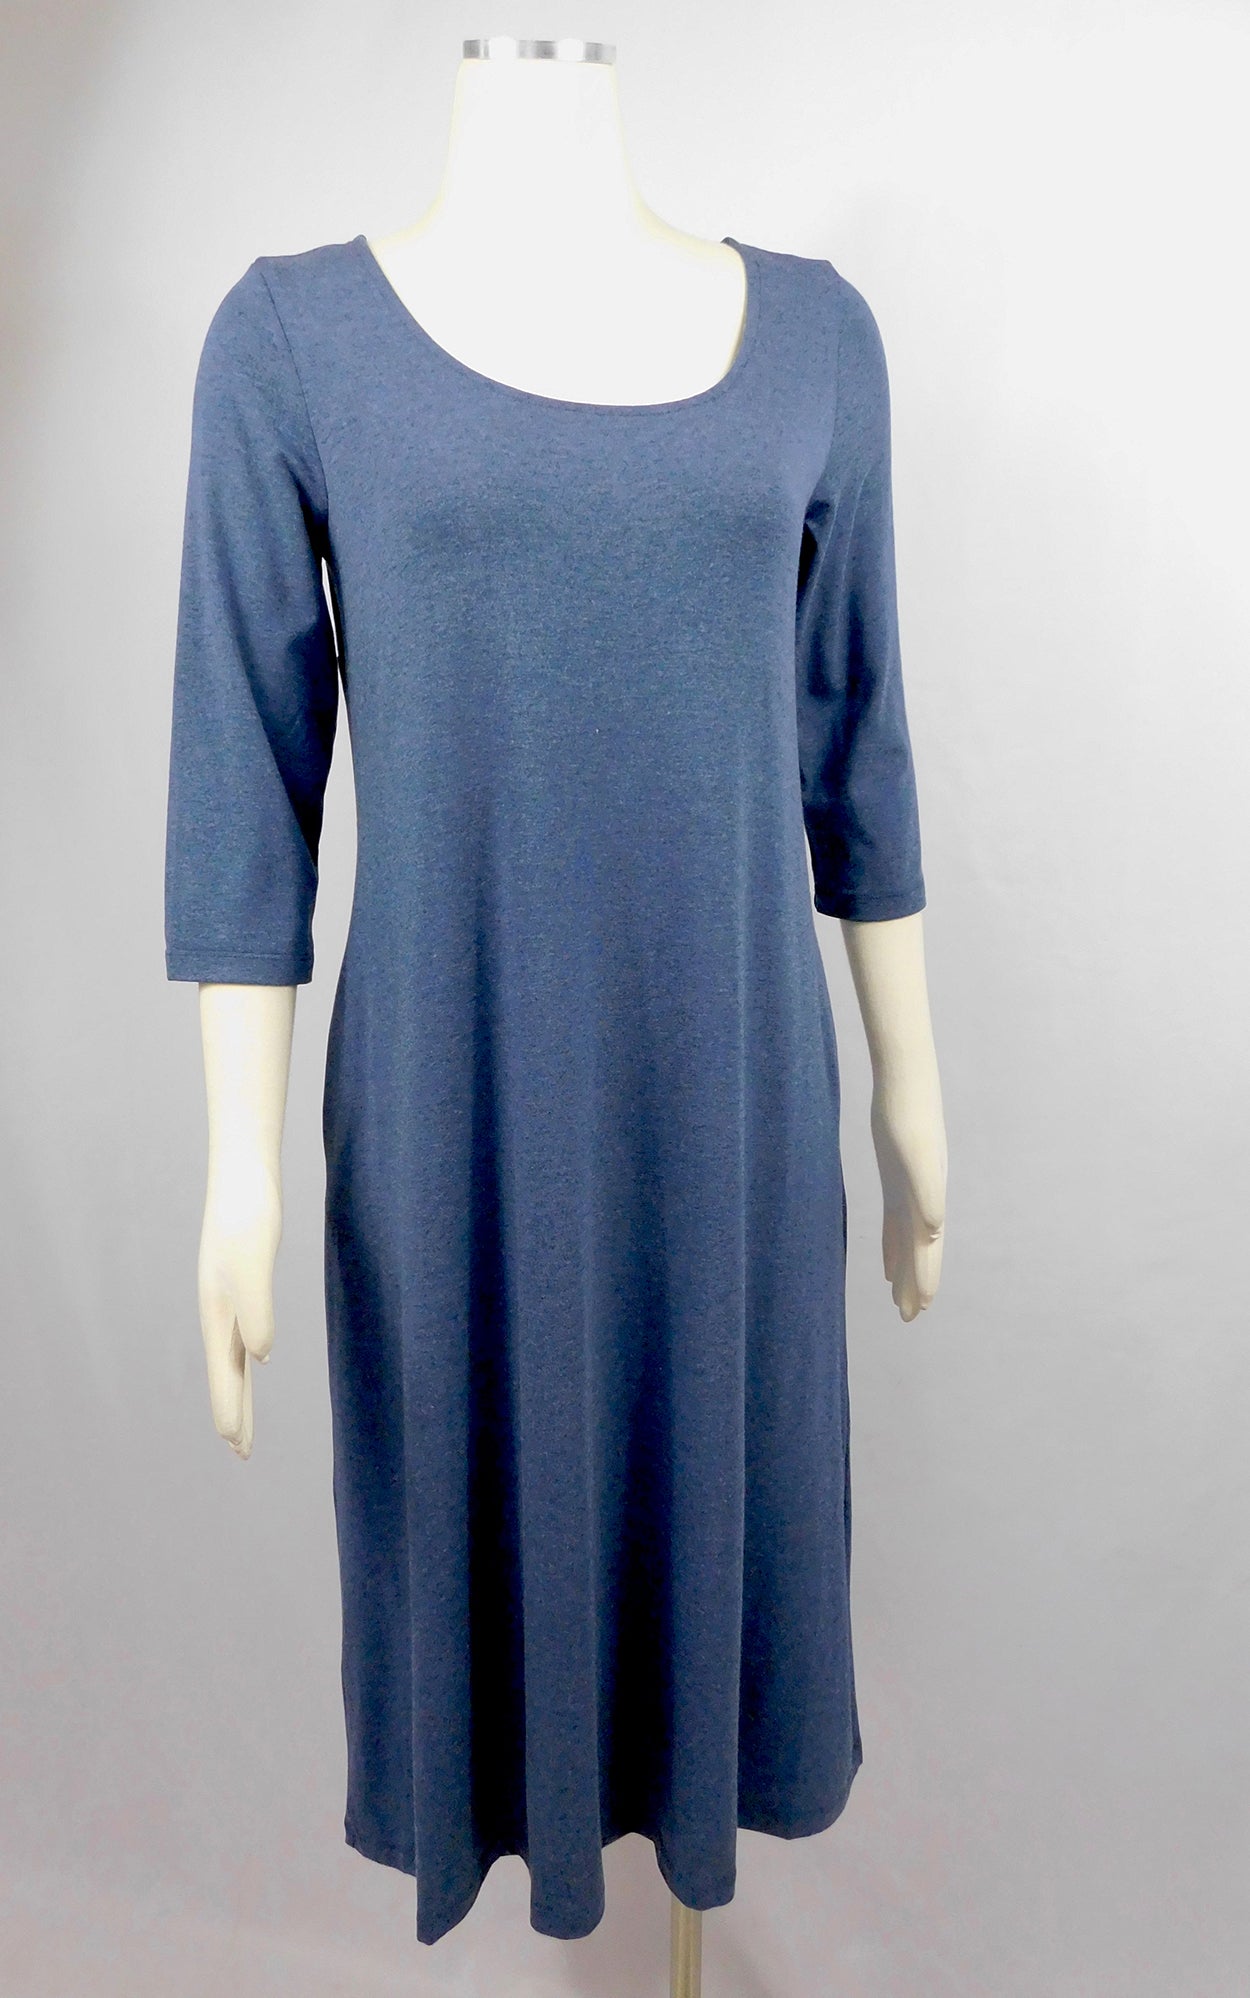 Bamboo Cotton 3/4 Sleeve Long Tunic Dress w Pockets - Heather Lake Blue